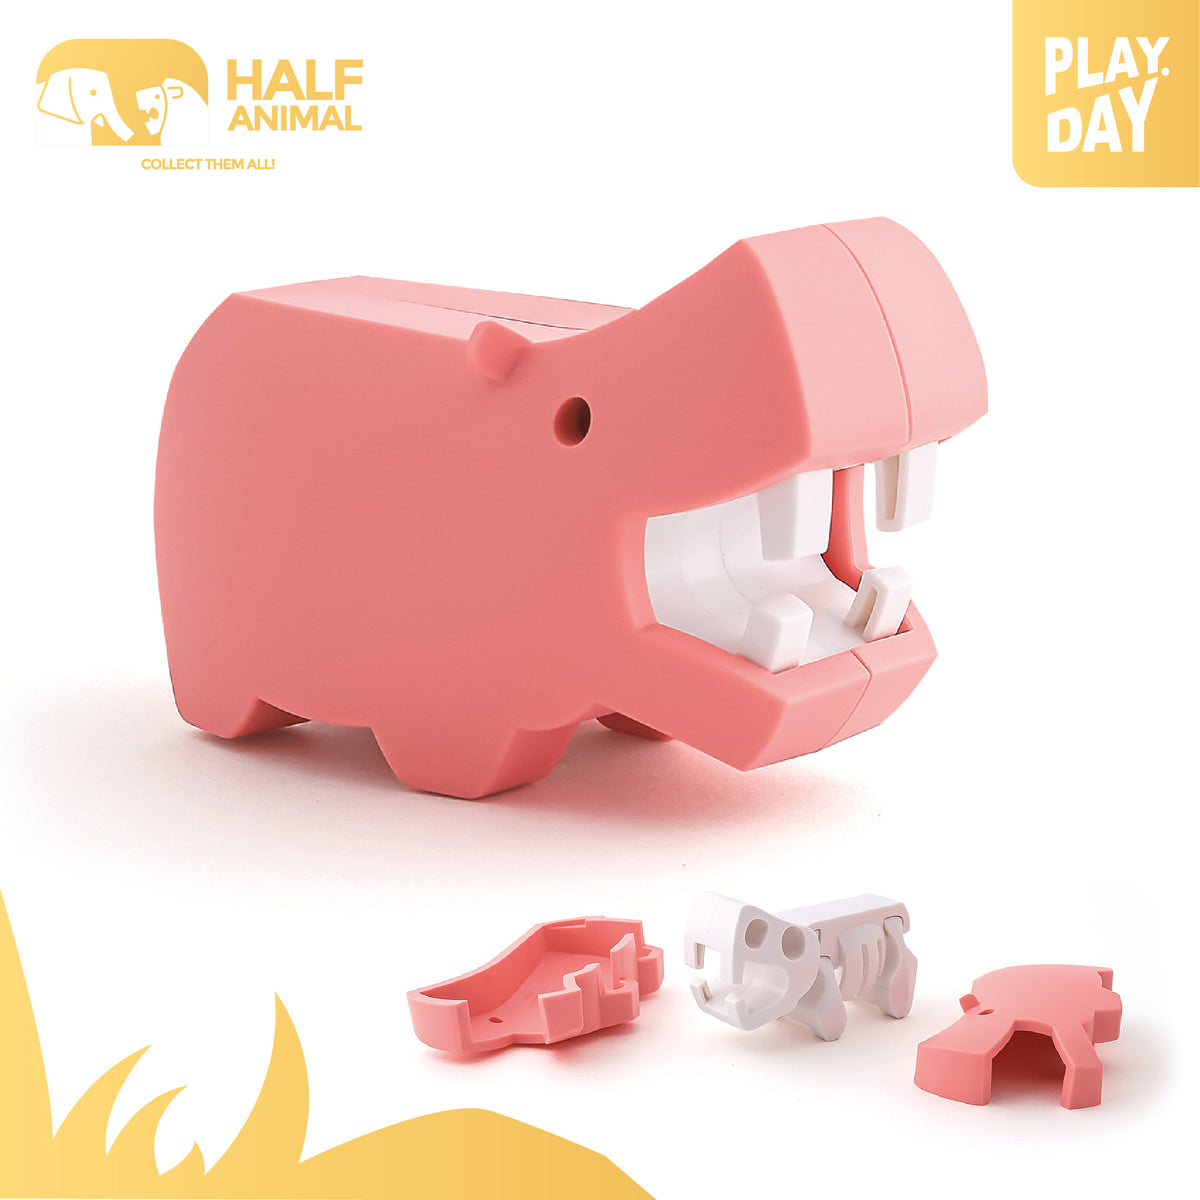 Halftoys Half Animal - Hippo